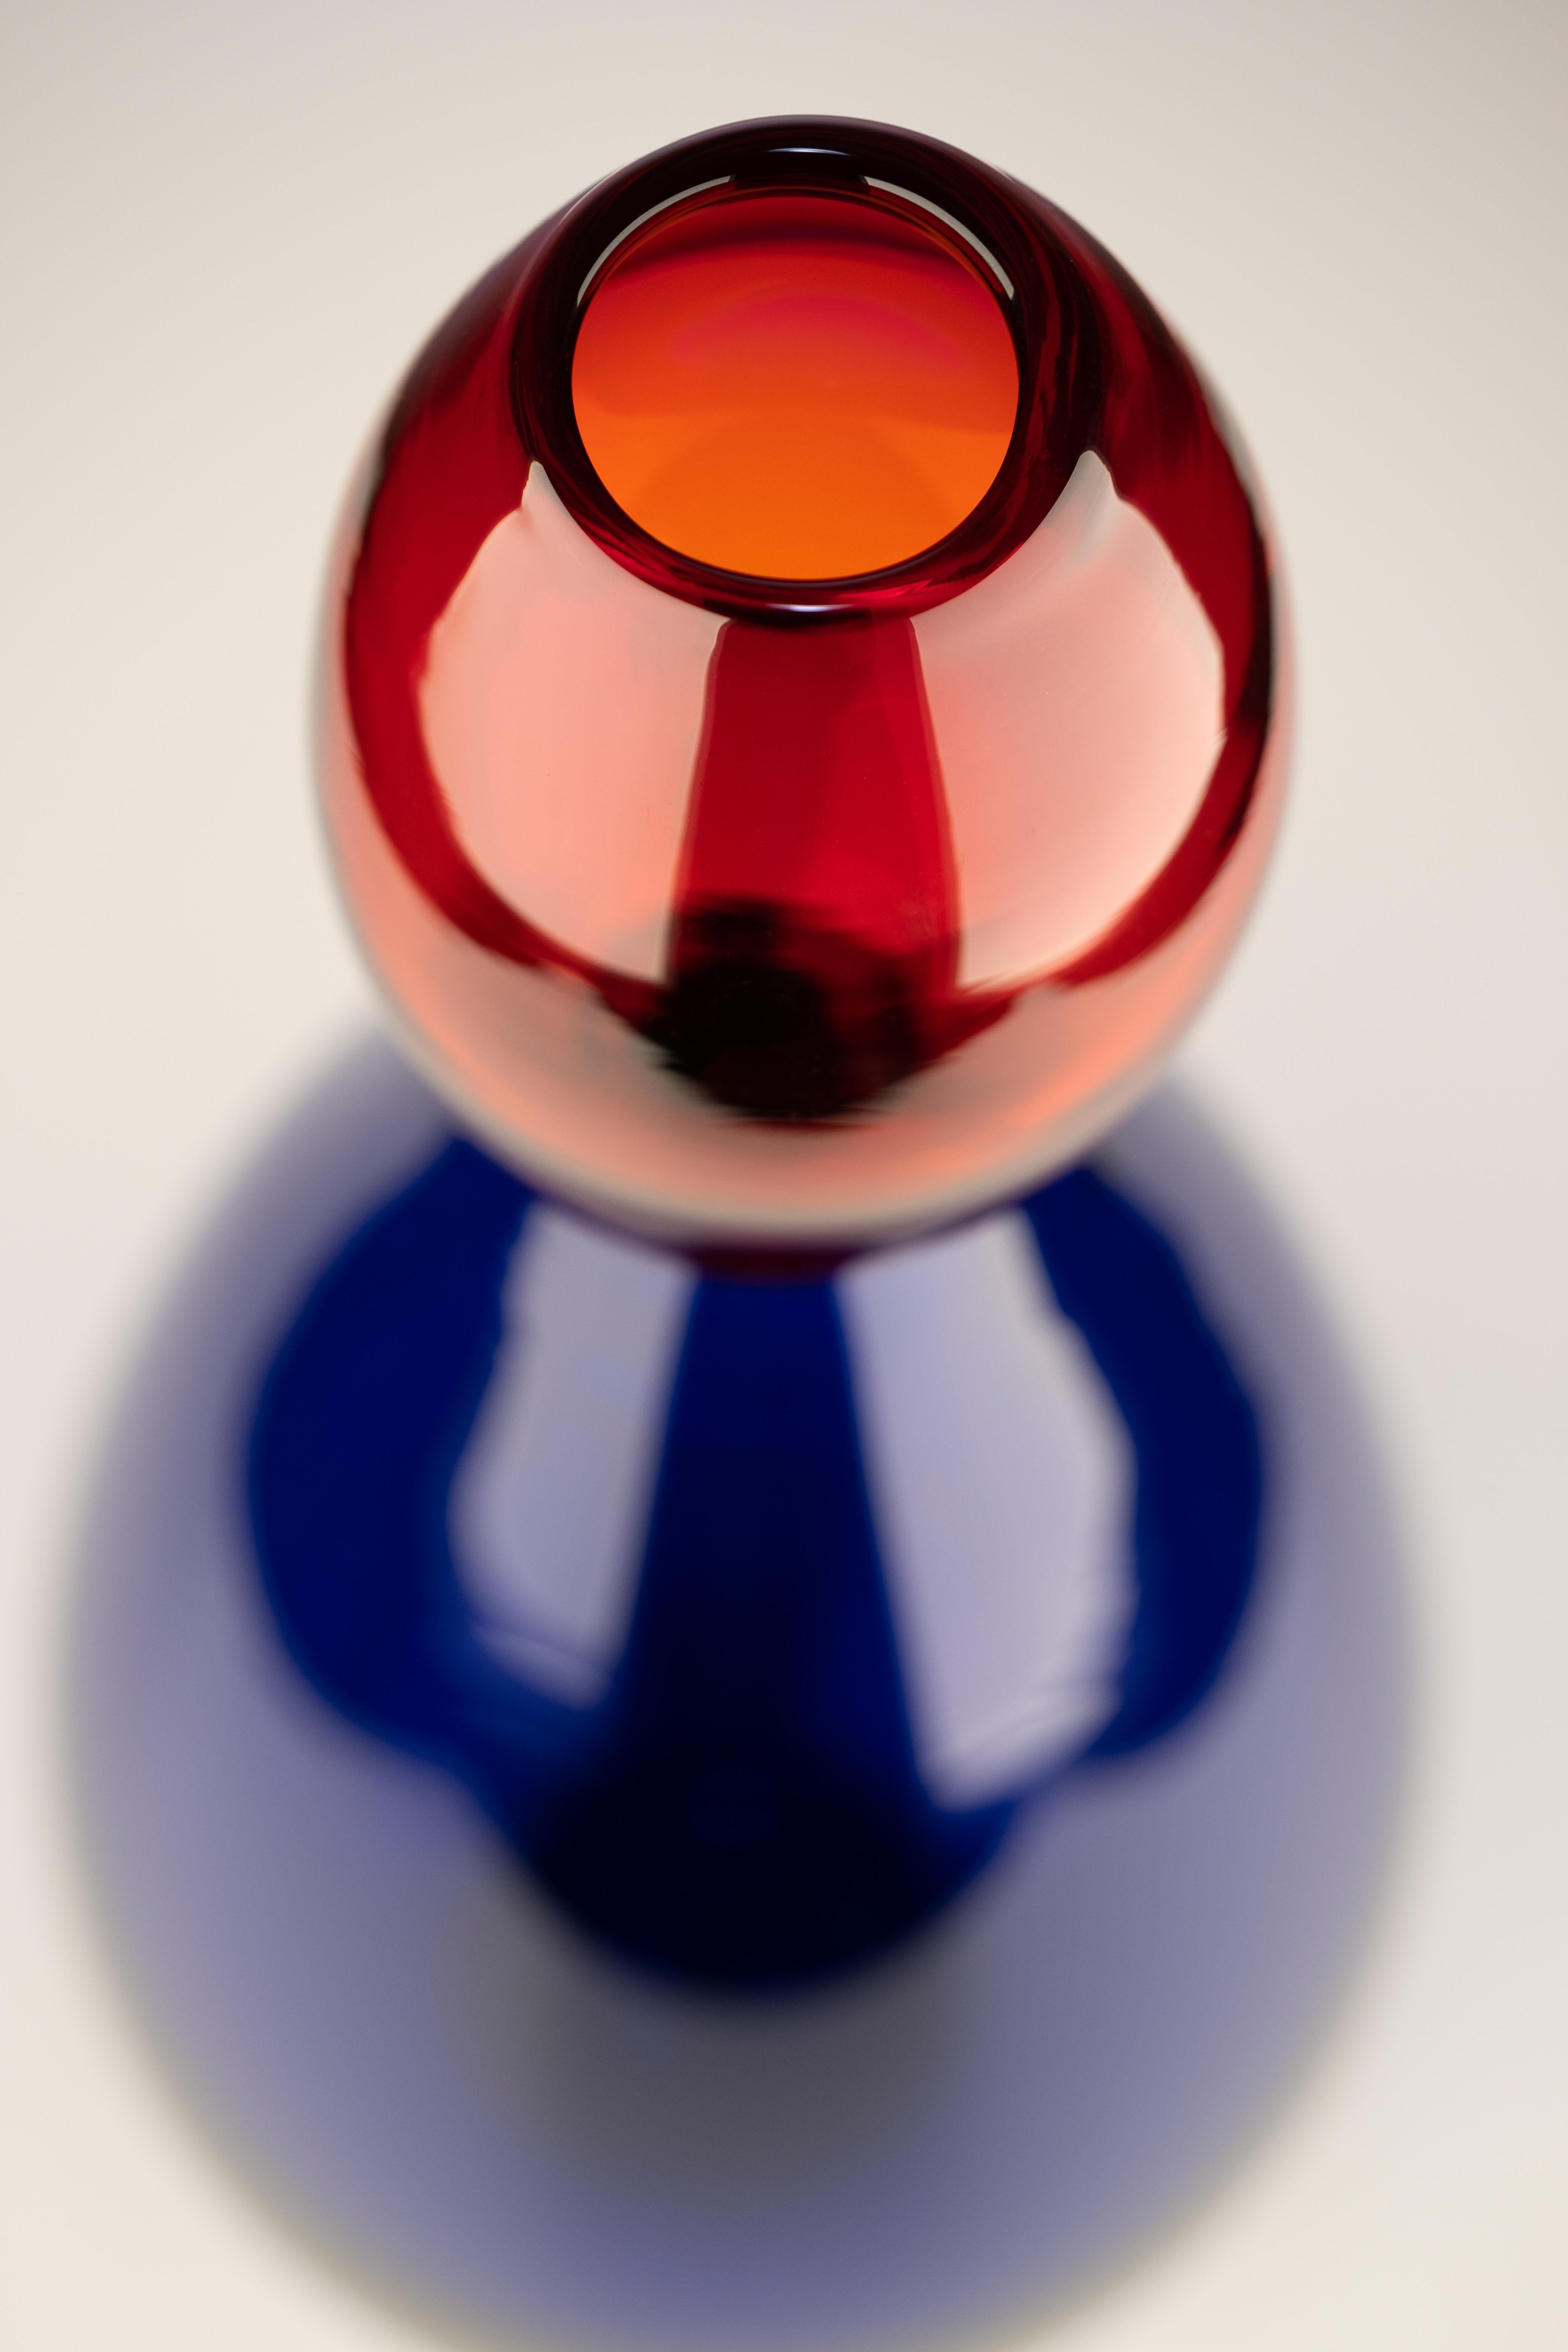 21st Century Karim Rashid King Vase Murano Glass Oriental Red and Ocean Blue In New Condition For Sale In Brembate di Sopra (BG), IT